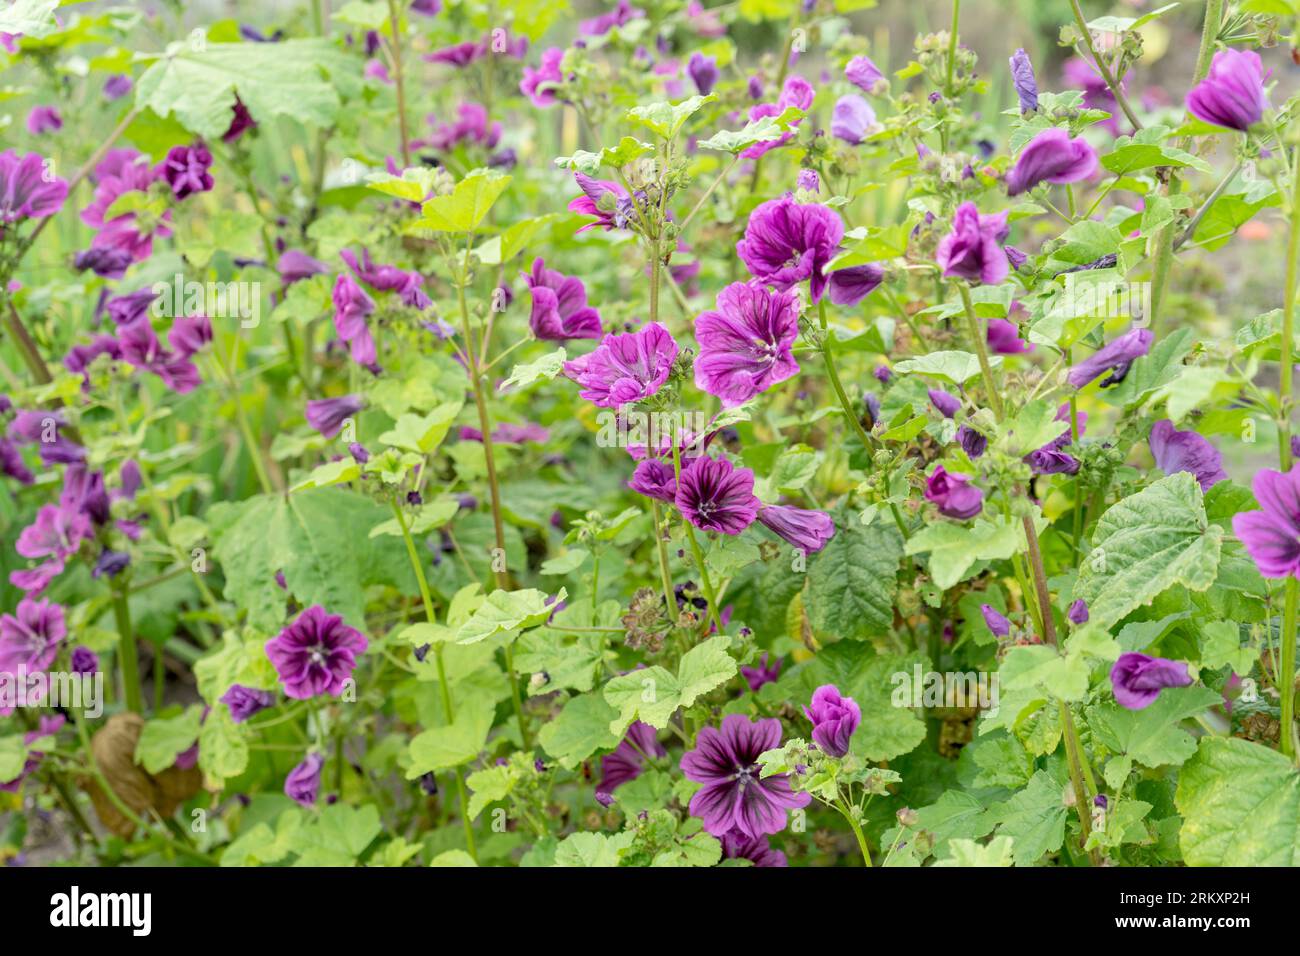 Detail shot of purple flowering mallow plants in the garden Stock Photo